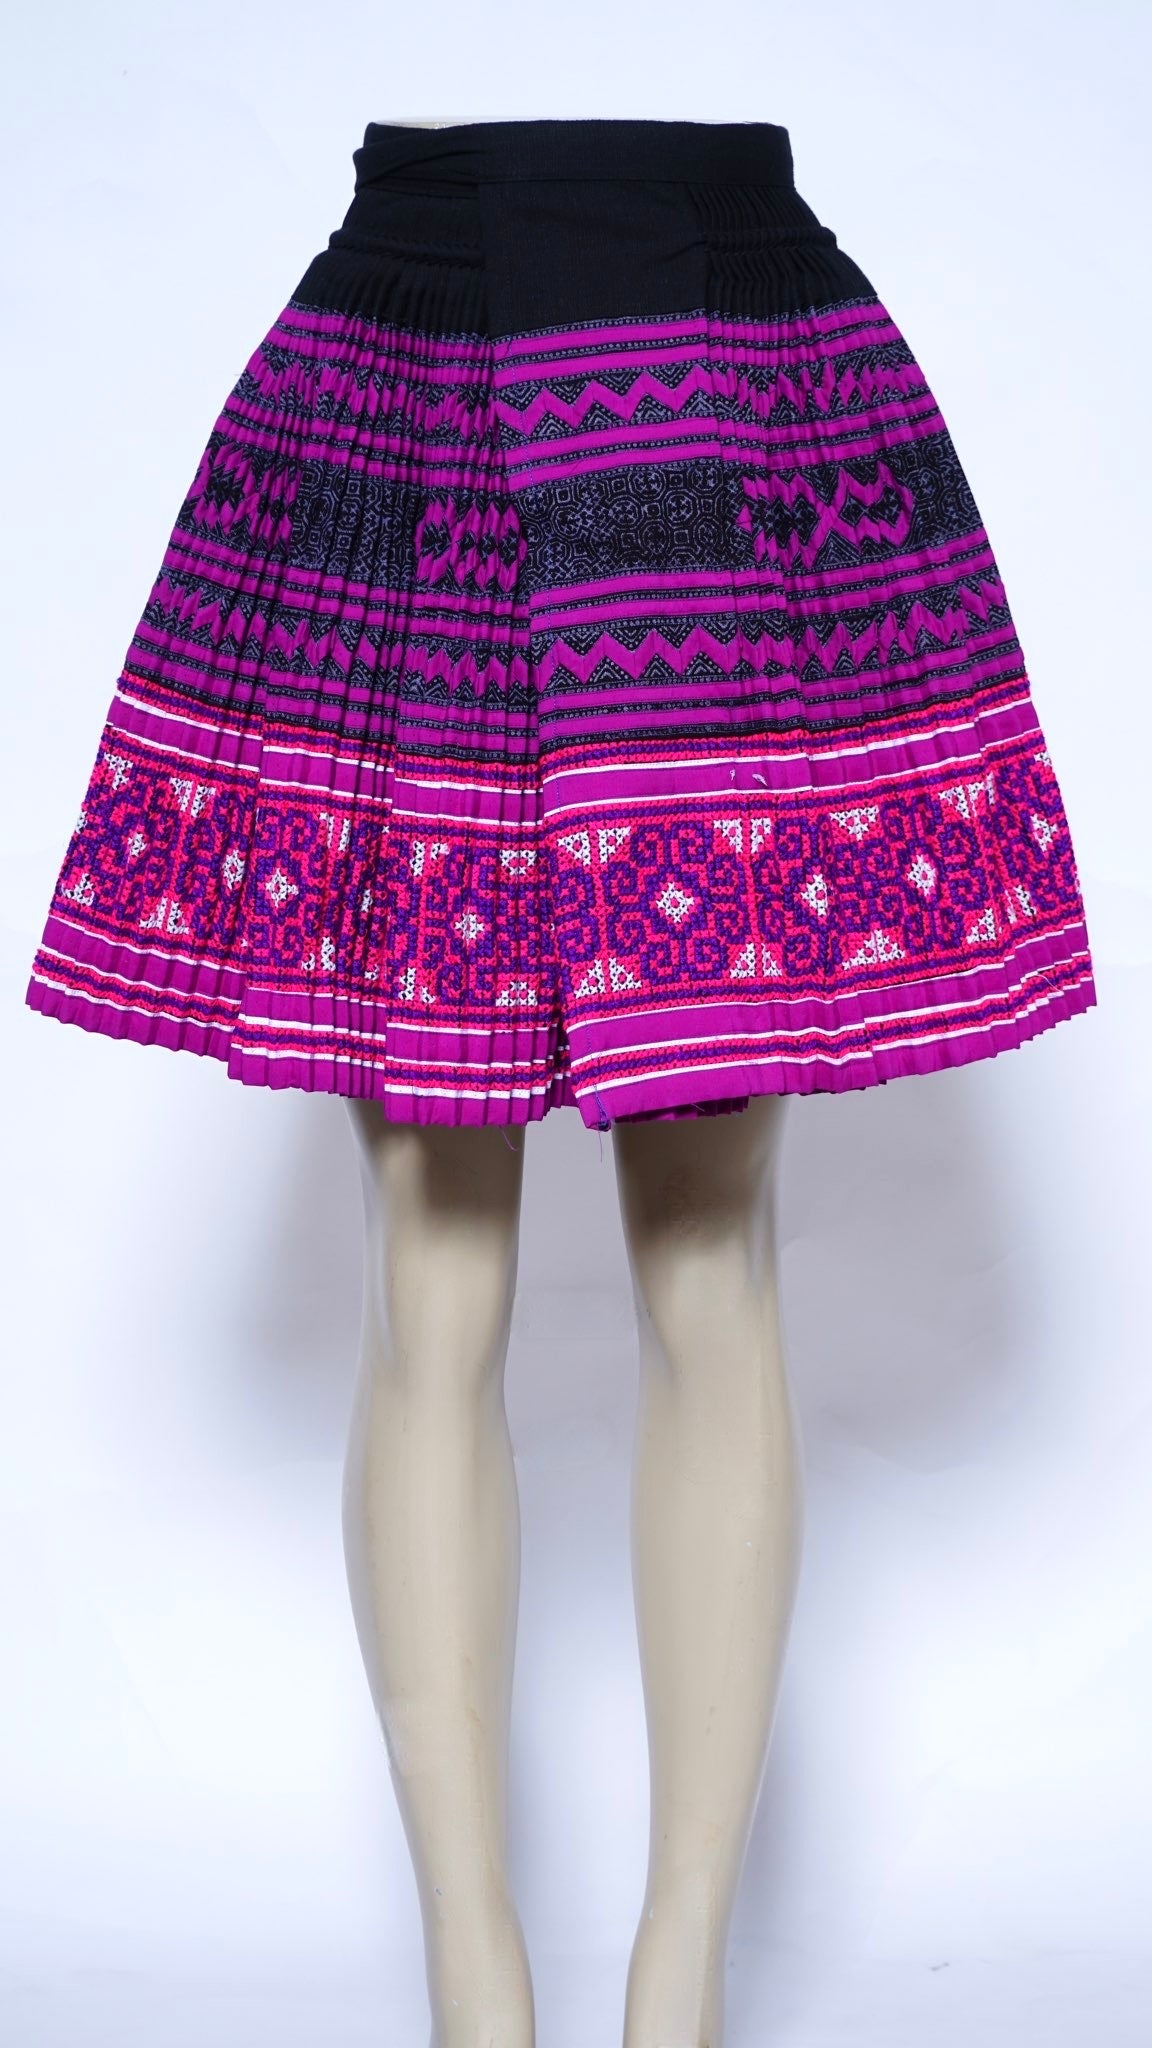 Hill Tribe Handmade Wrapped Skirt (40x20)